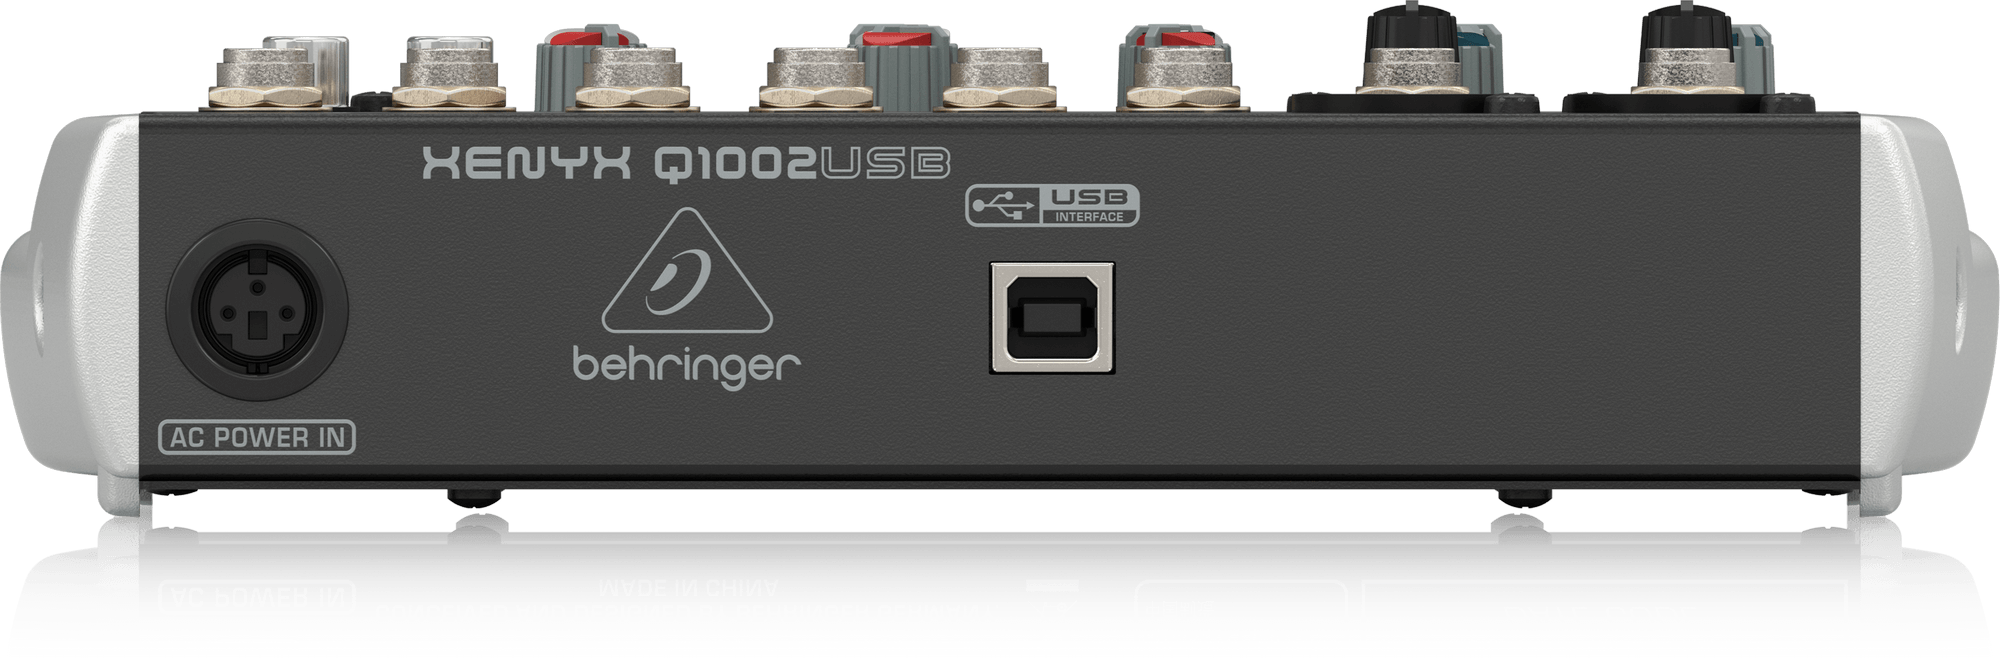 Behringer Xenyx Q1002USB Mixer with USB (Xenyx-Q1002USB) | BEHRINGER , Zoso Music